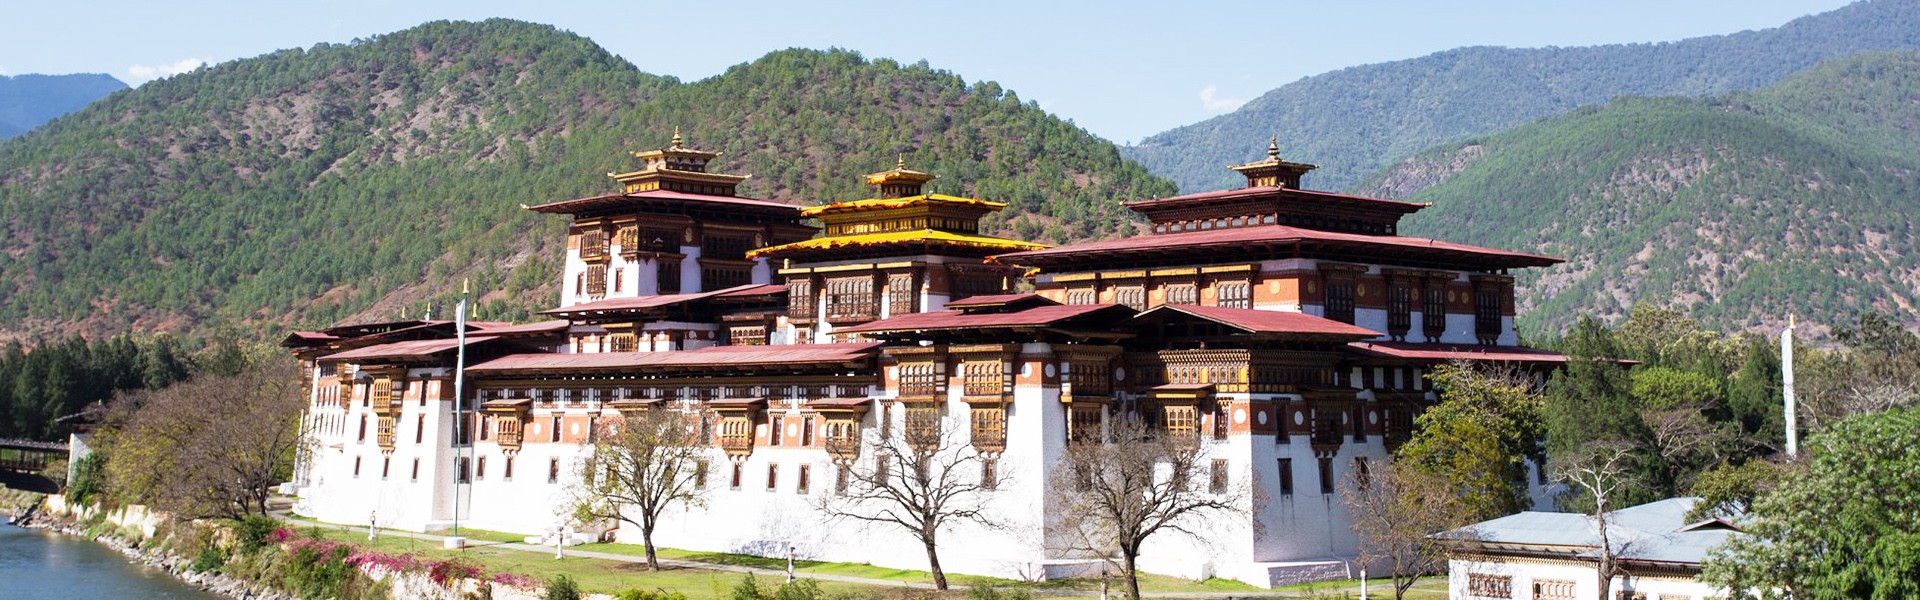 Shangri La Bhutan Tours